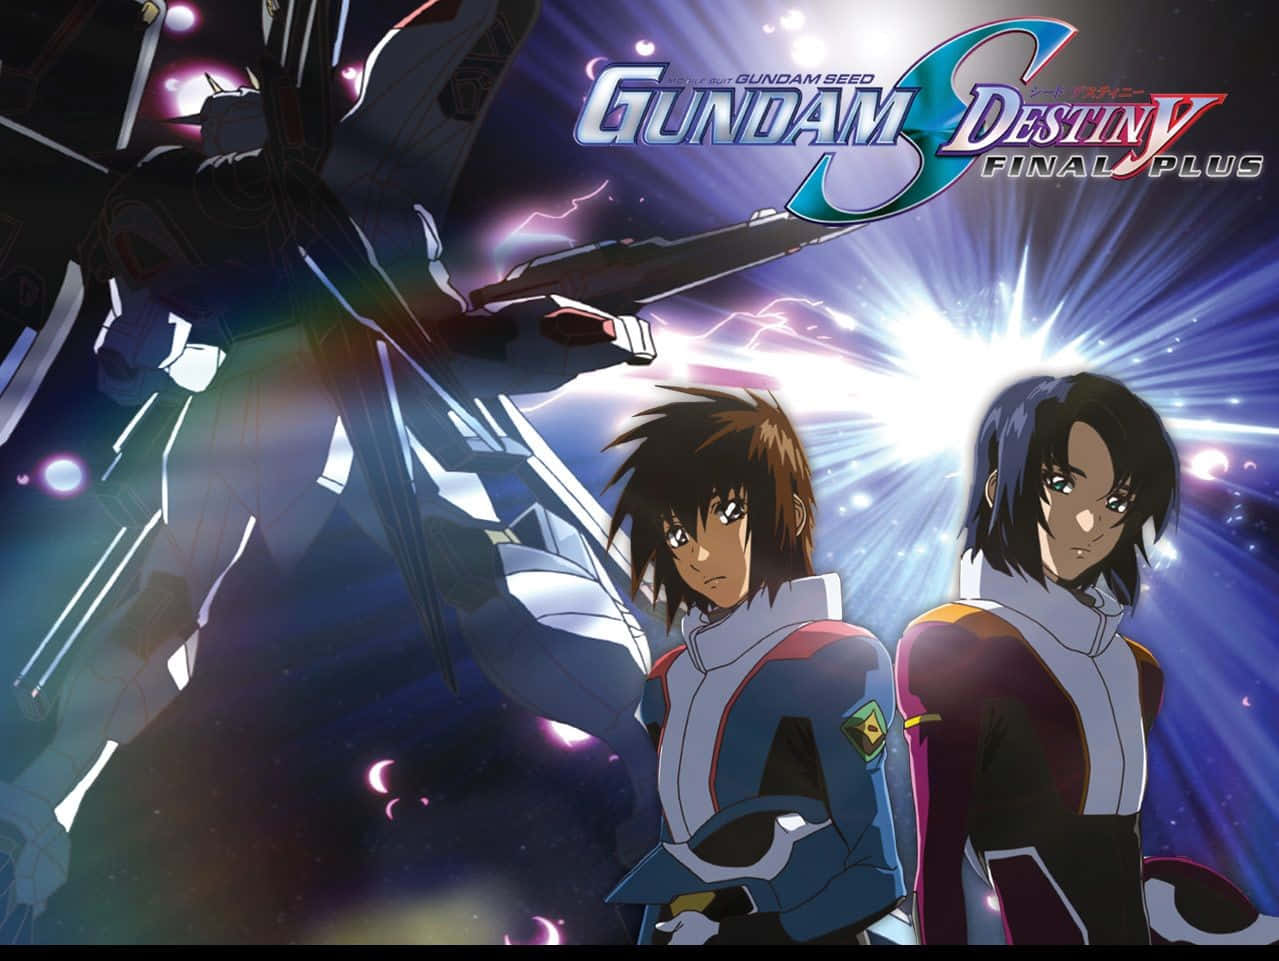 Intense Combat Scene From Gundam Seed Wallpaper